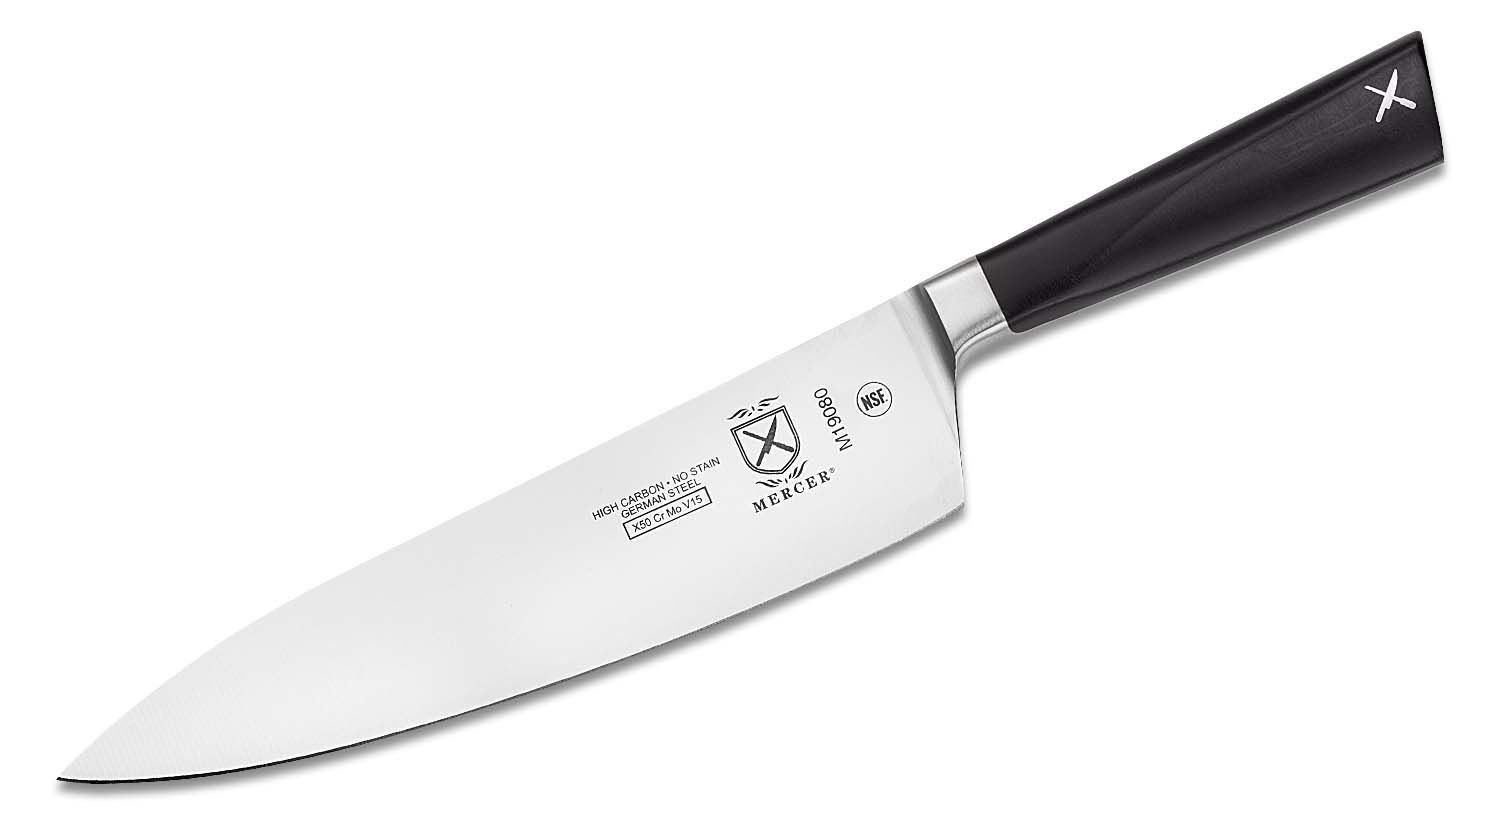  Mercer Culinary 10-Piece Forged Renaissance Knife Set,Black: Block  Knife Sets: Home & Kitchen